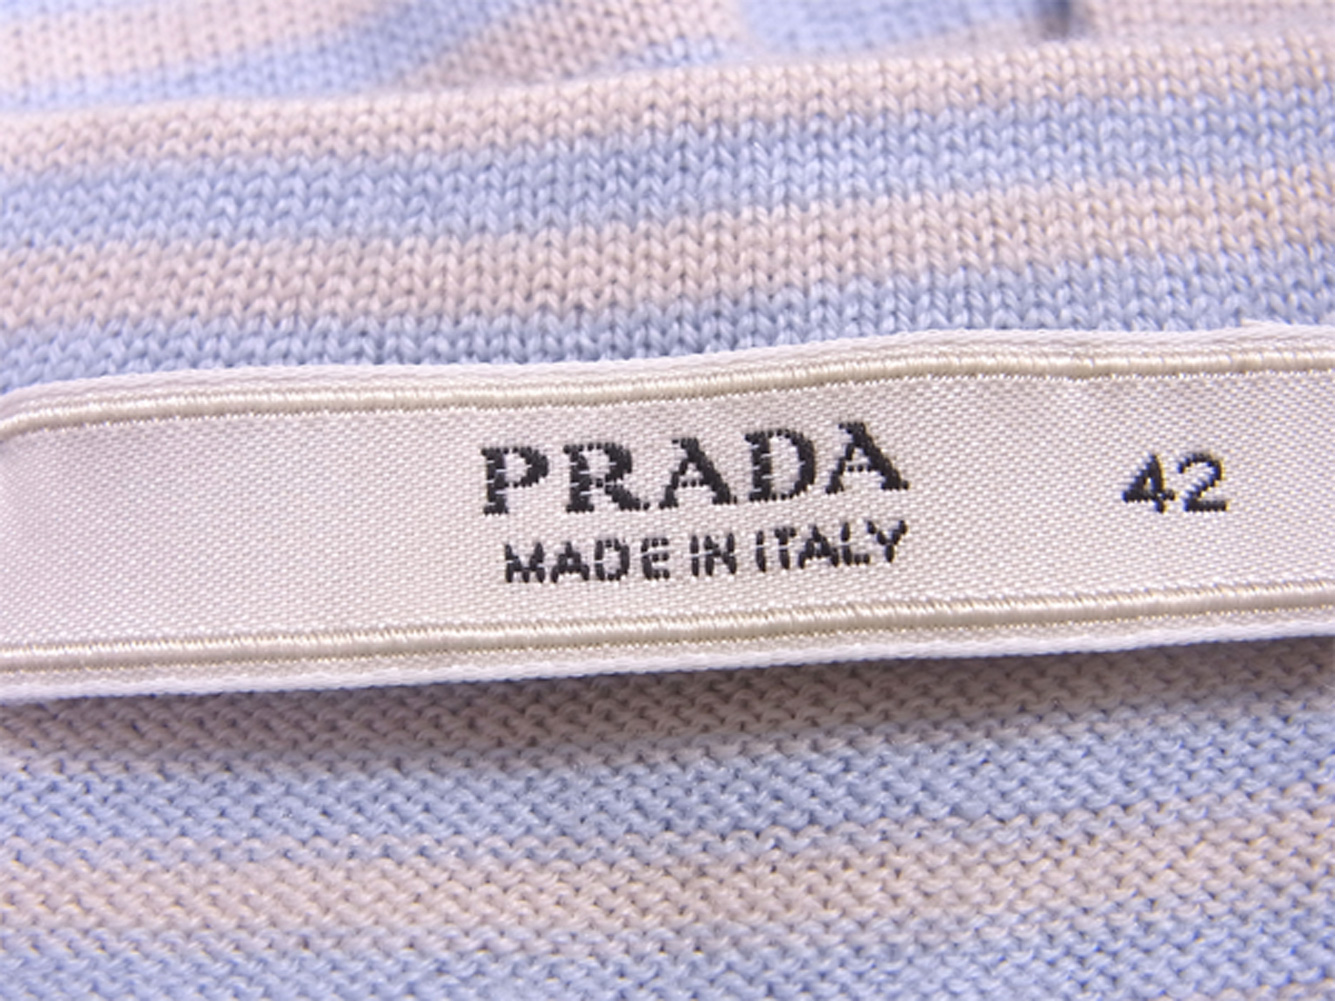 prada label for sale, OFF 77%,www 